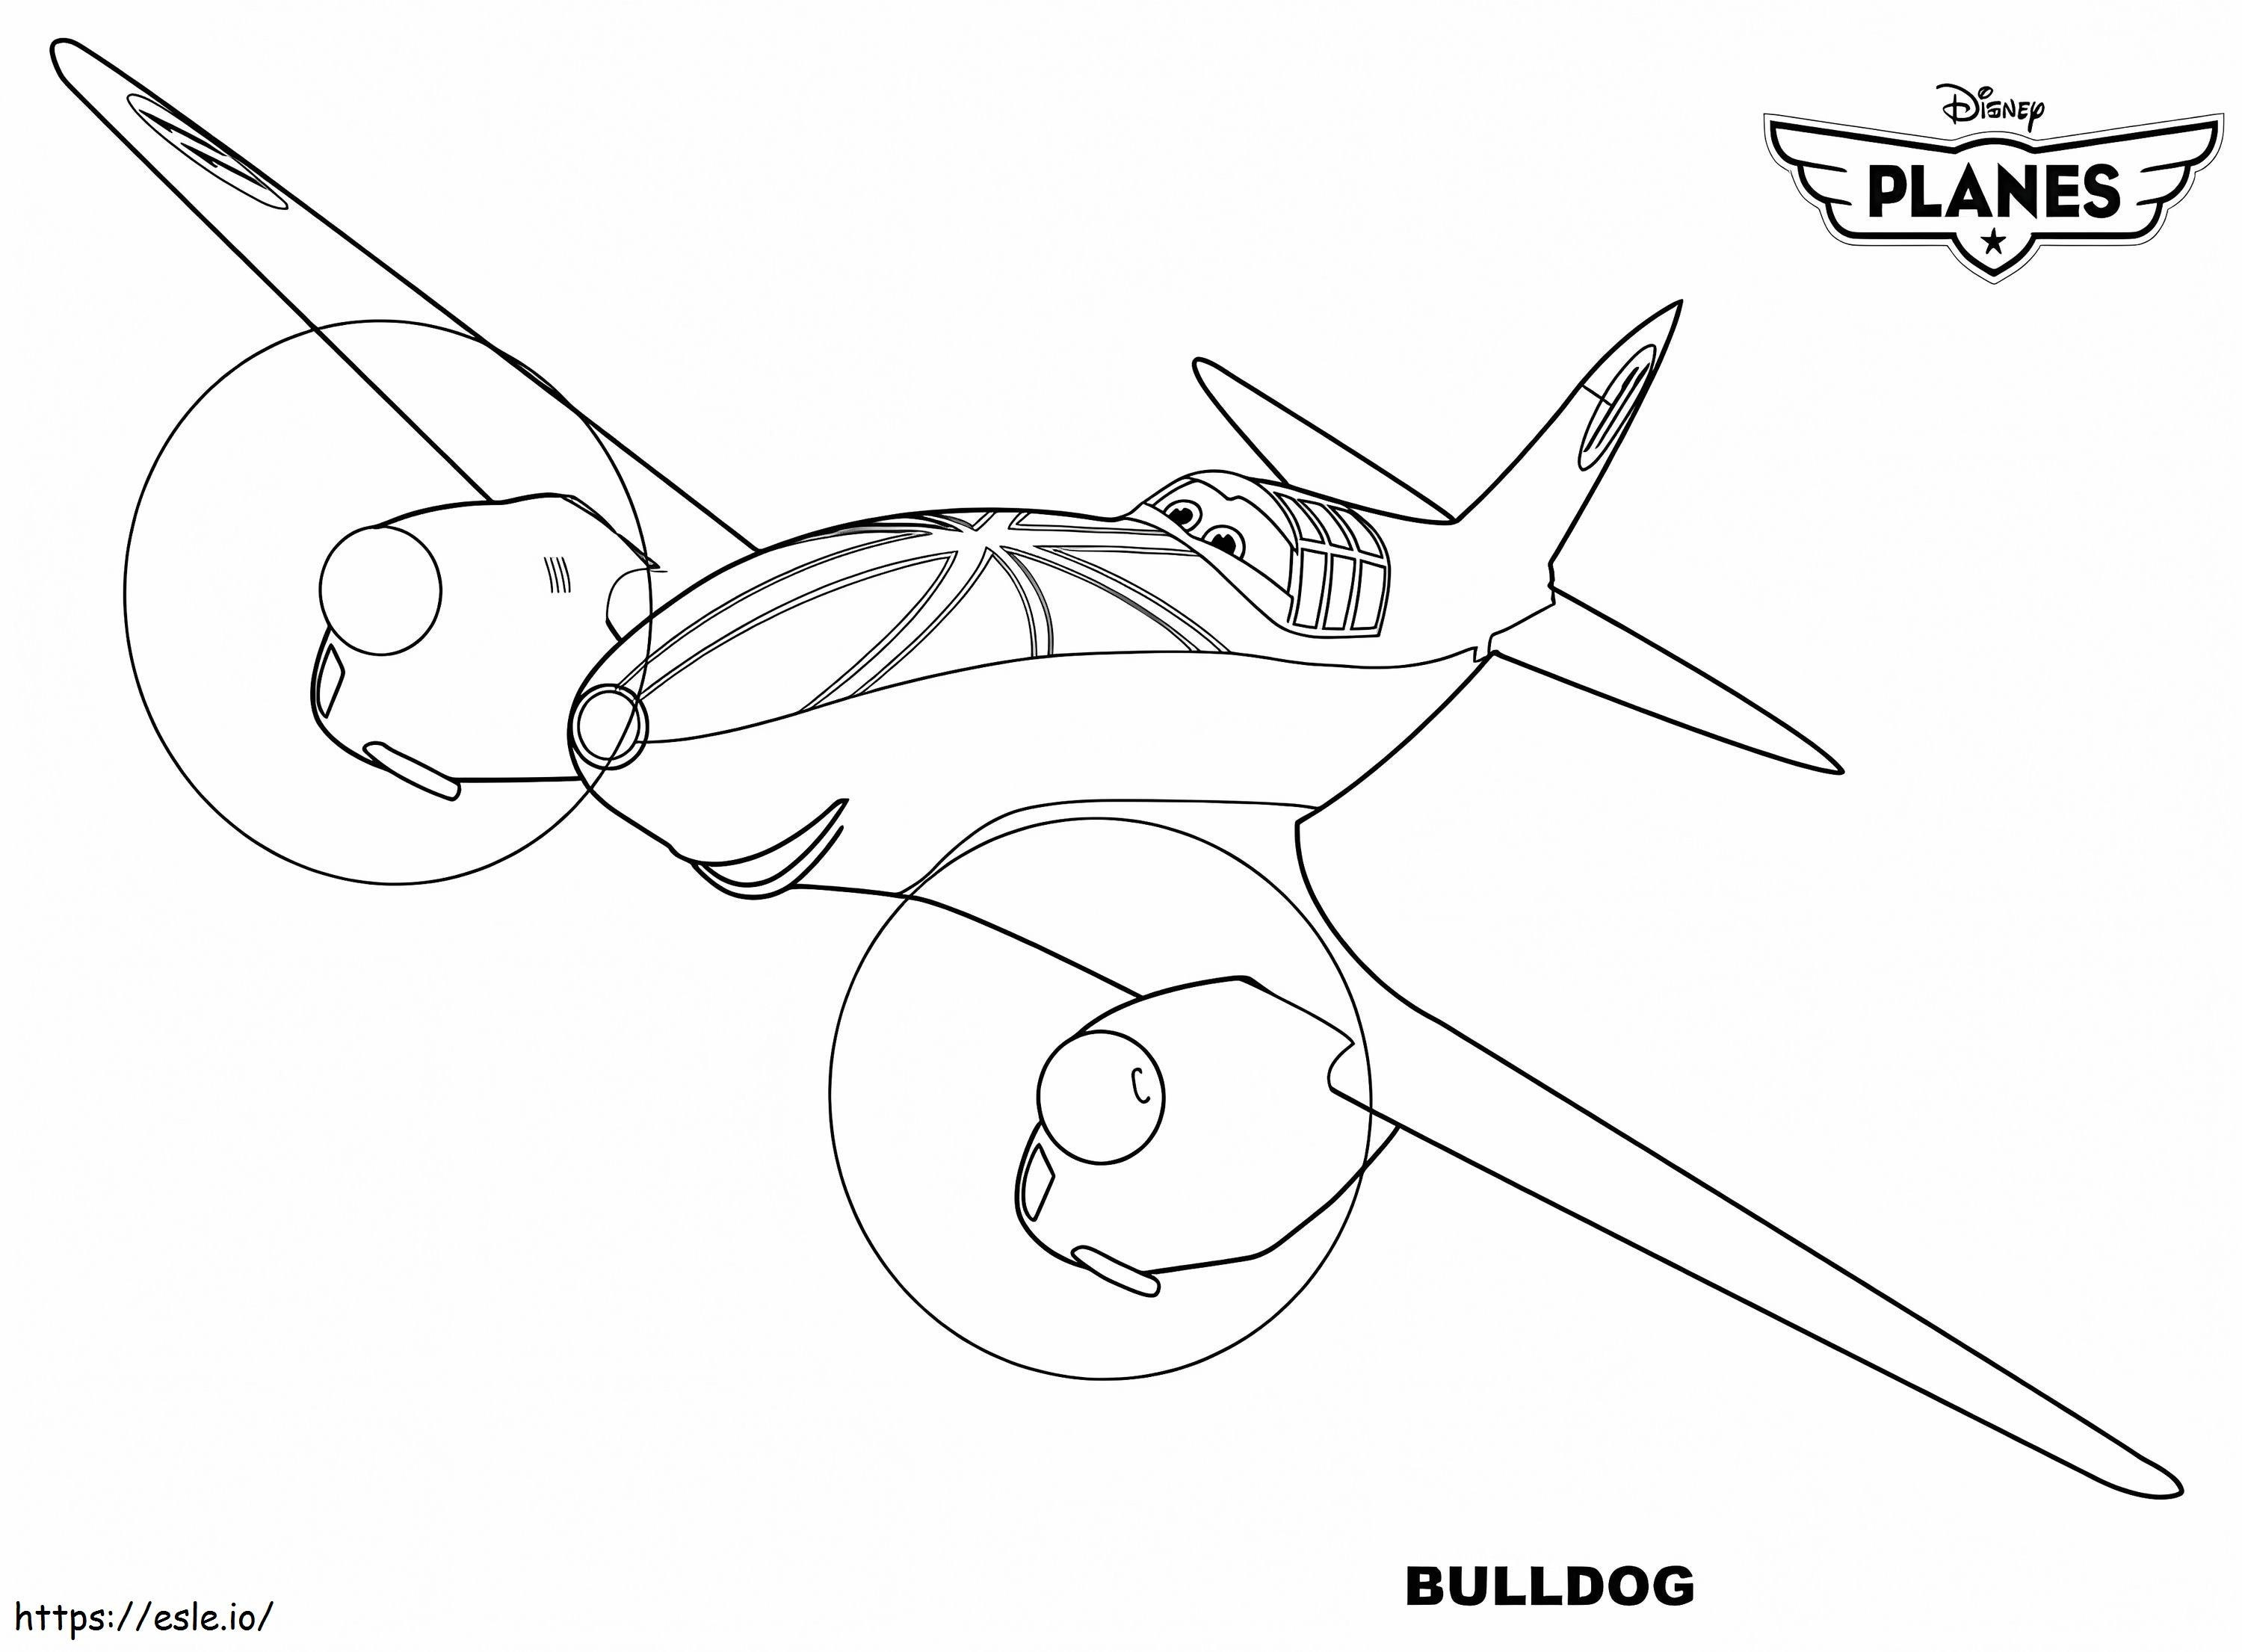 Bulldog-Flugzeuge ausmalbilder